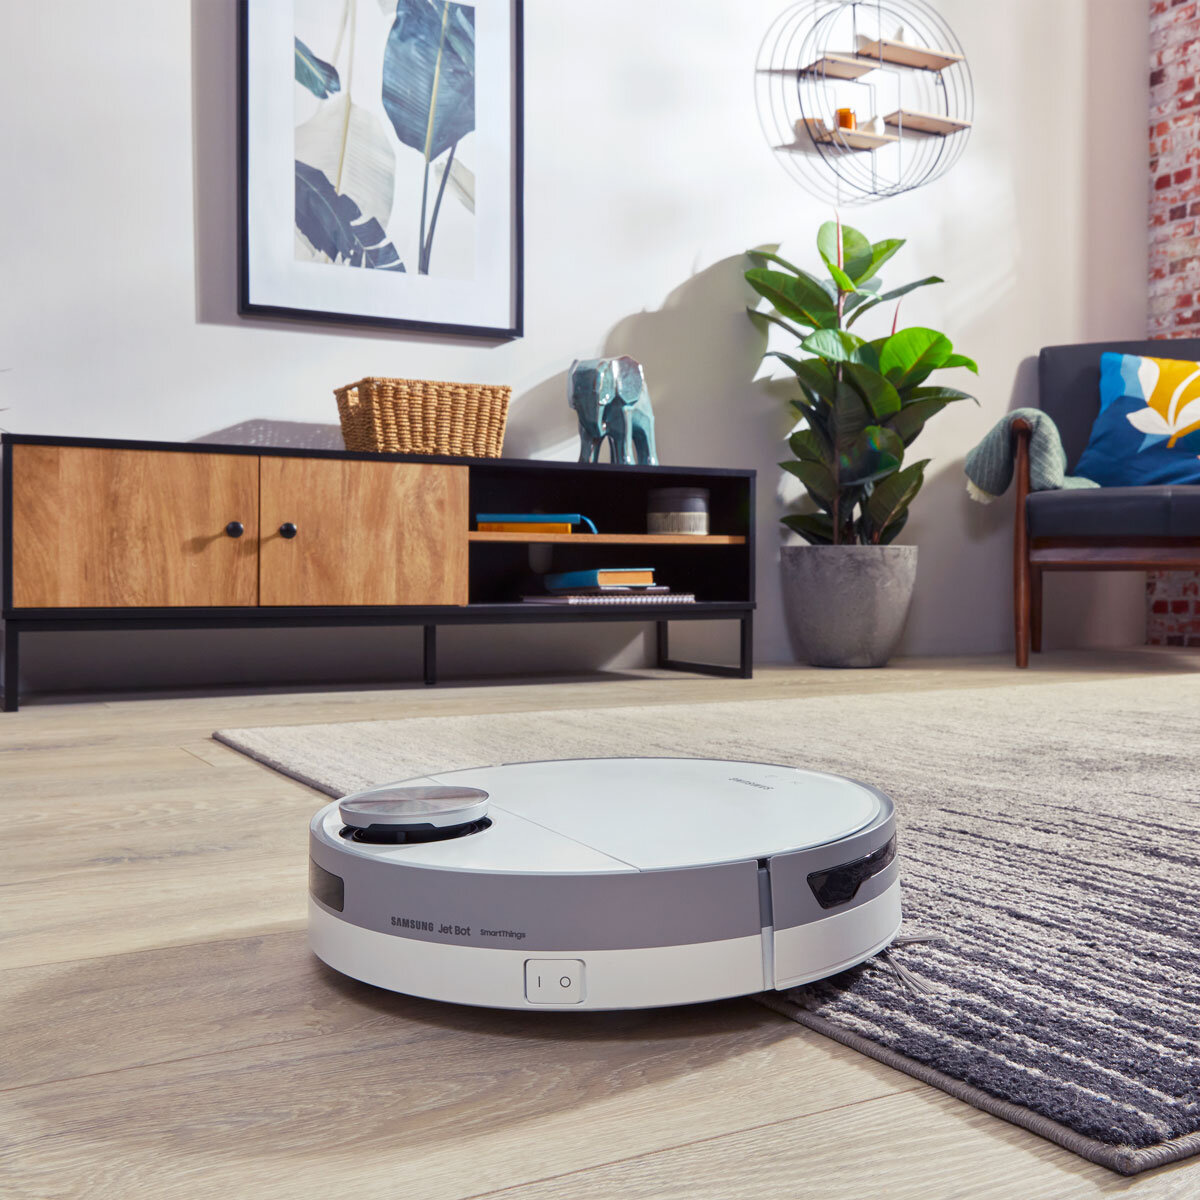 Lifestyle image of Samsung Robotic Vac on carpet